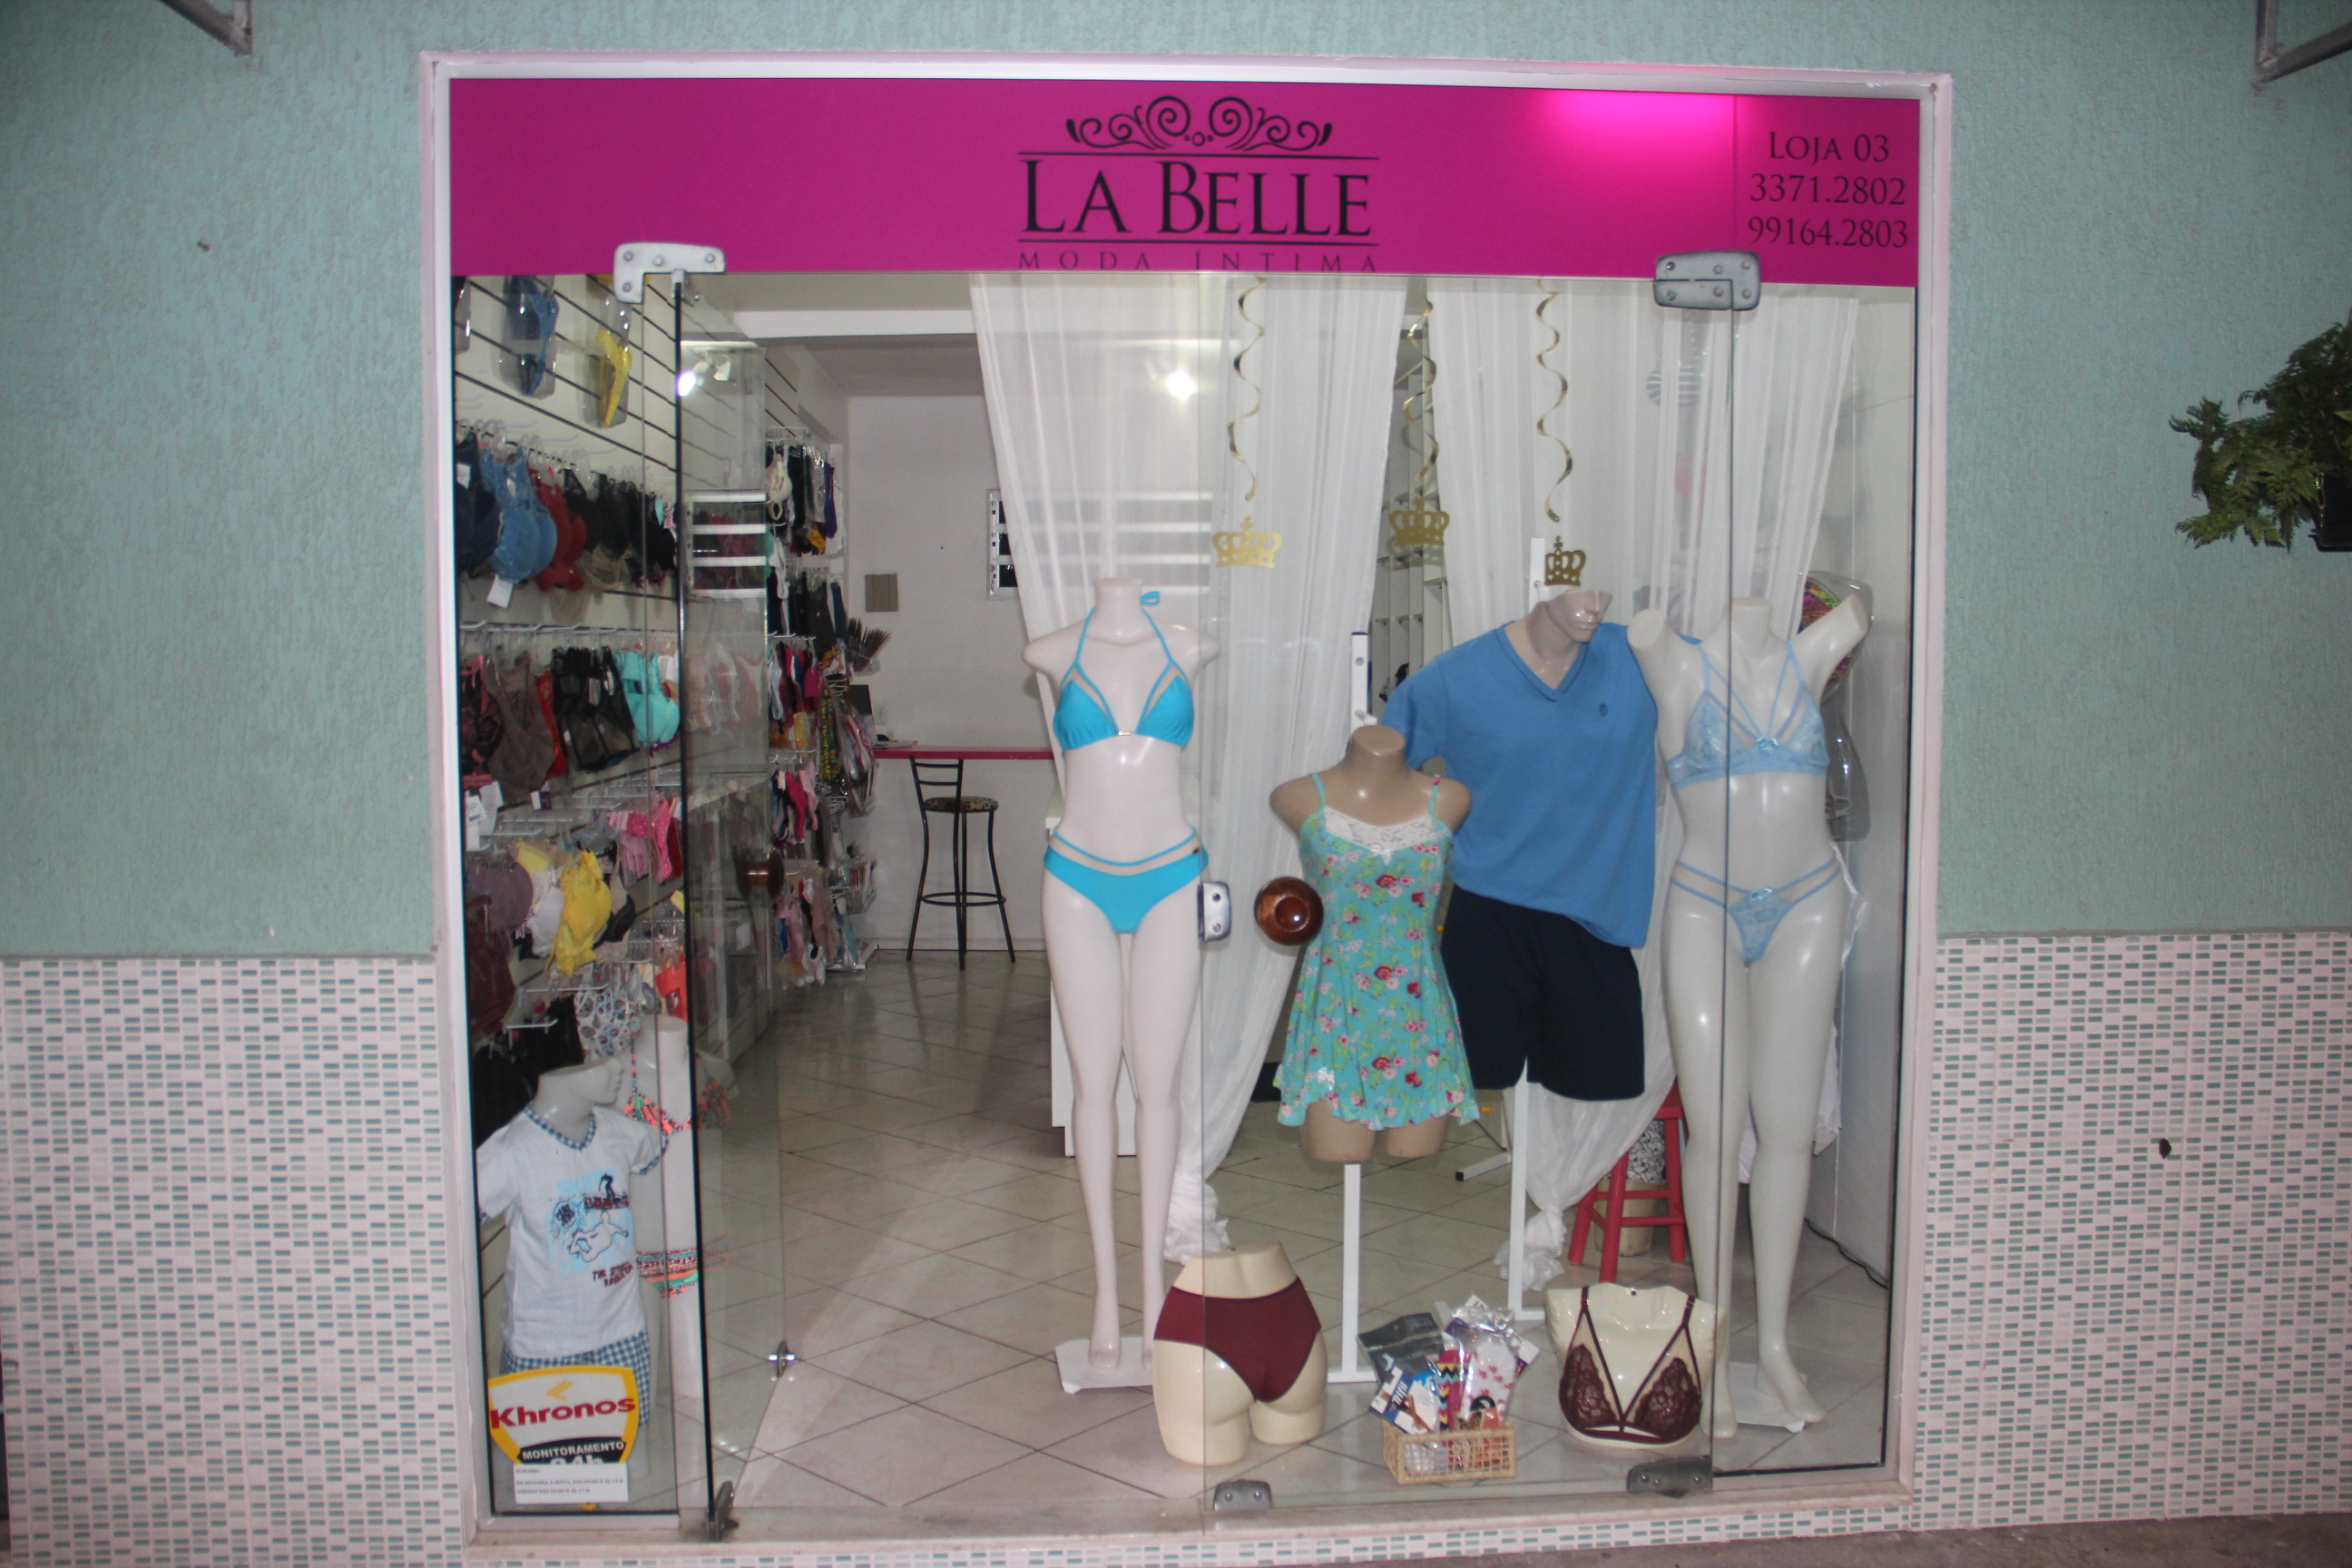 LA BELLE, moda íntima para todos estilos no centrinho do Campeche